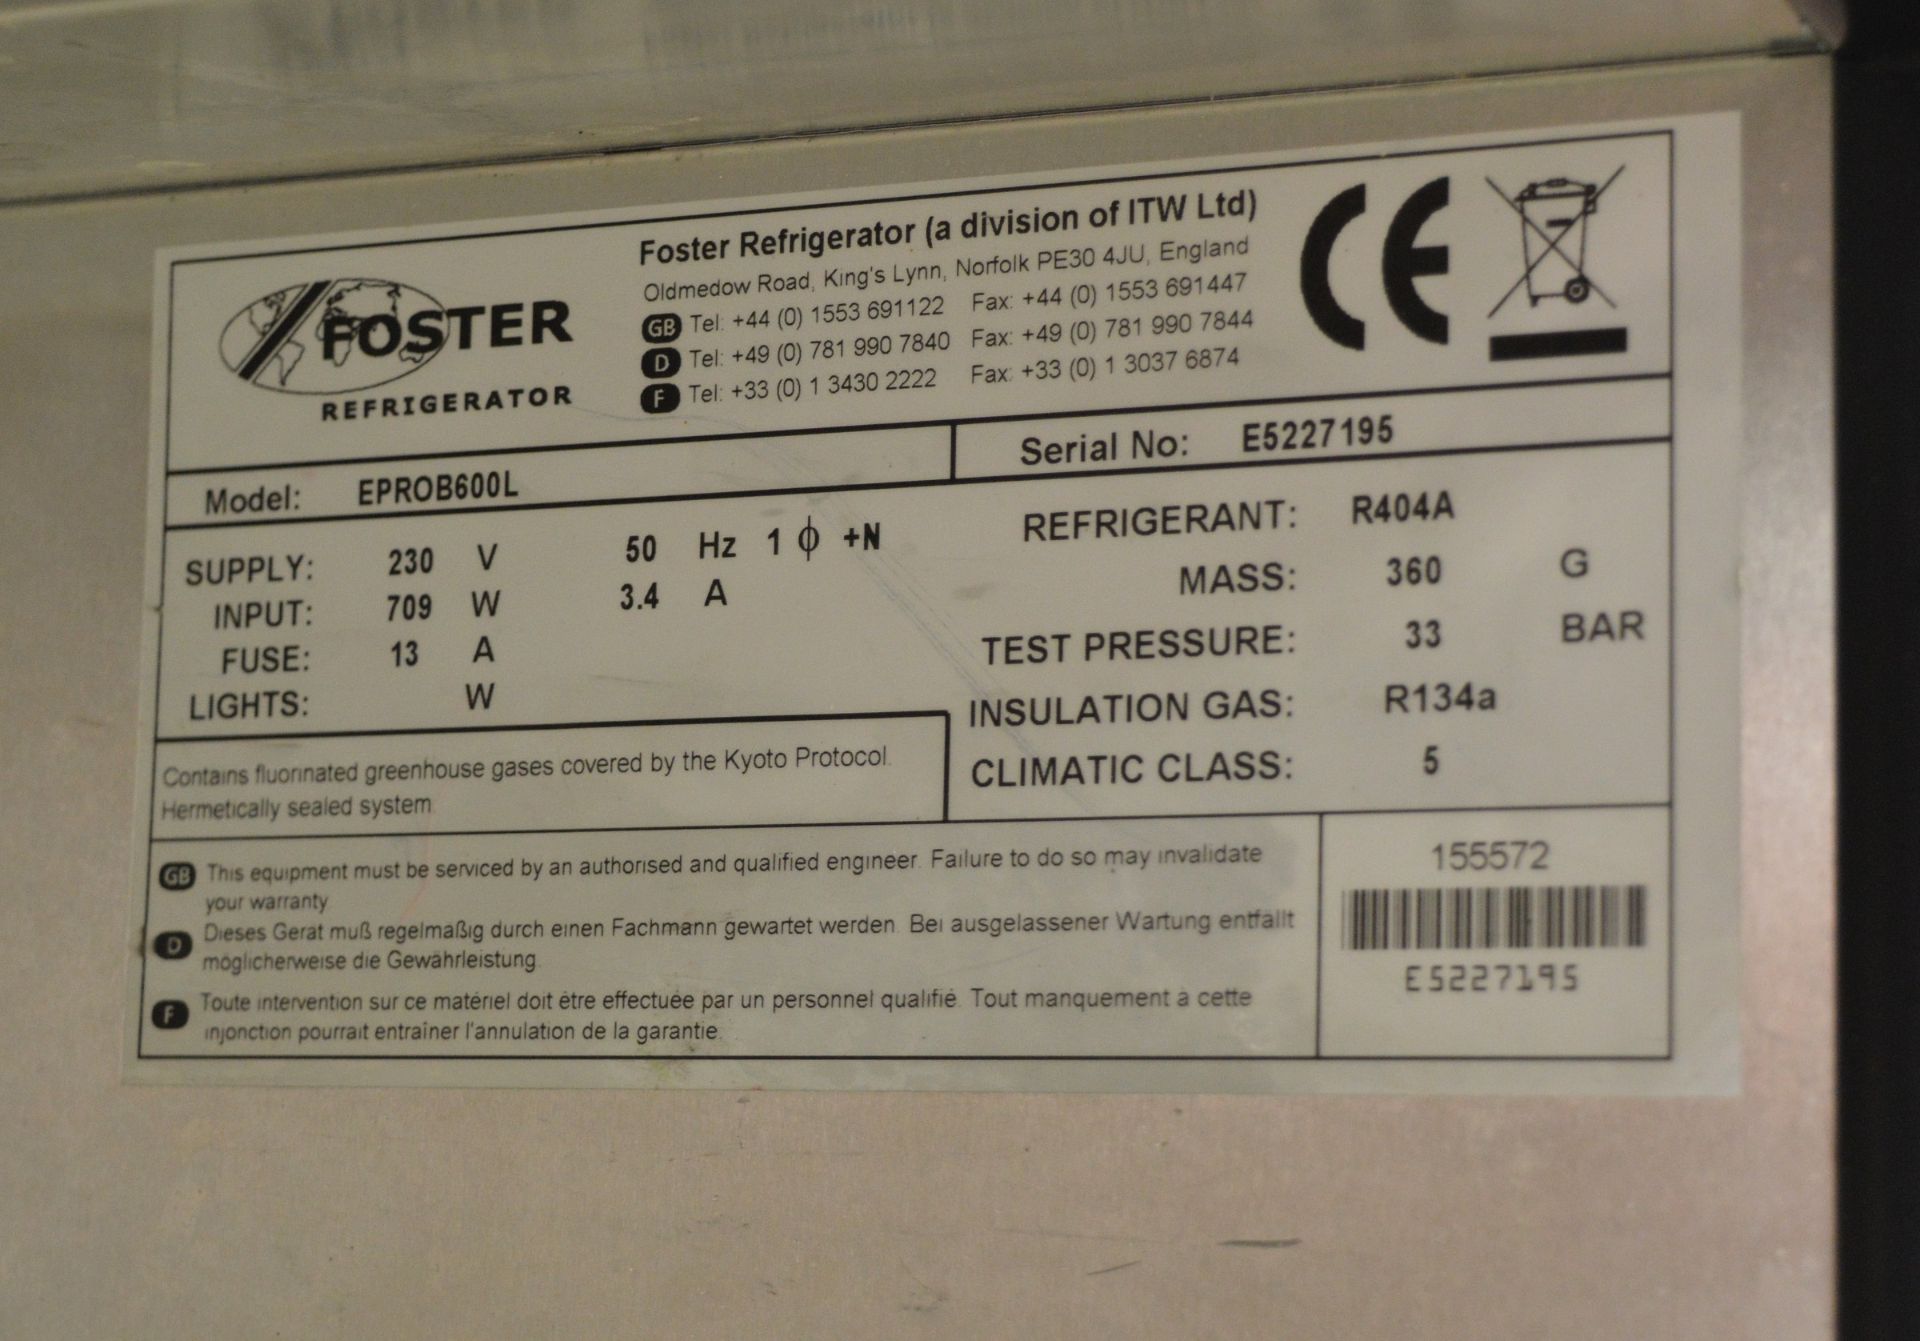 Foster EPROB600L Upright Single Door Refrigerator (No shelves) - Image 5 of 6